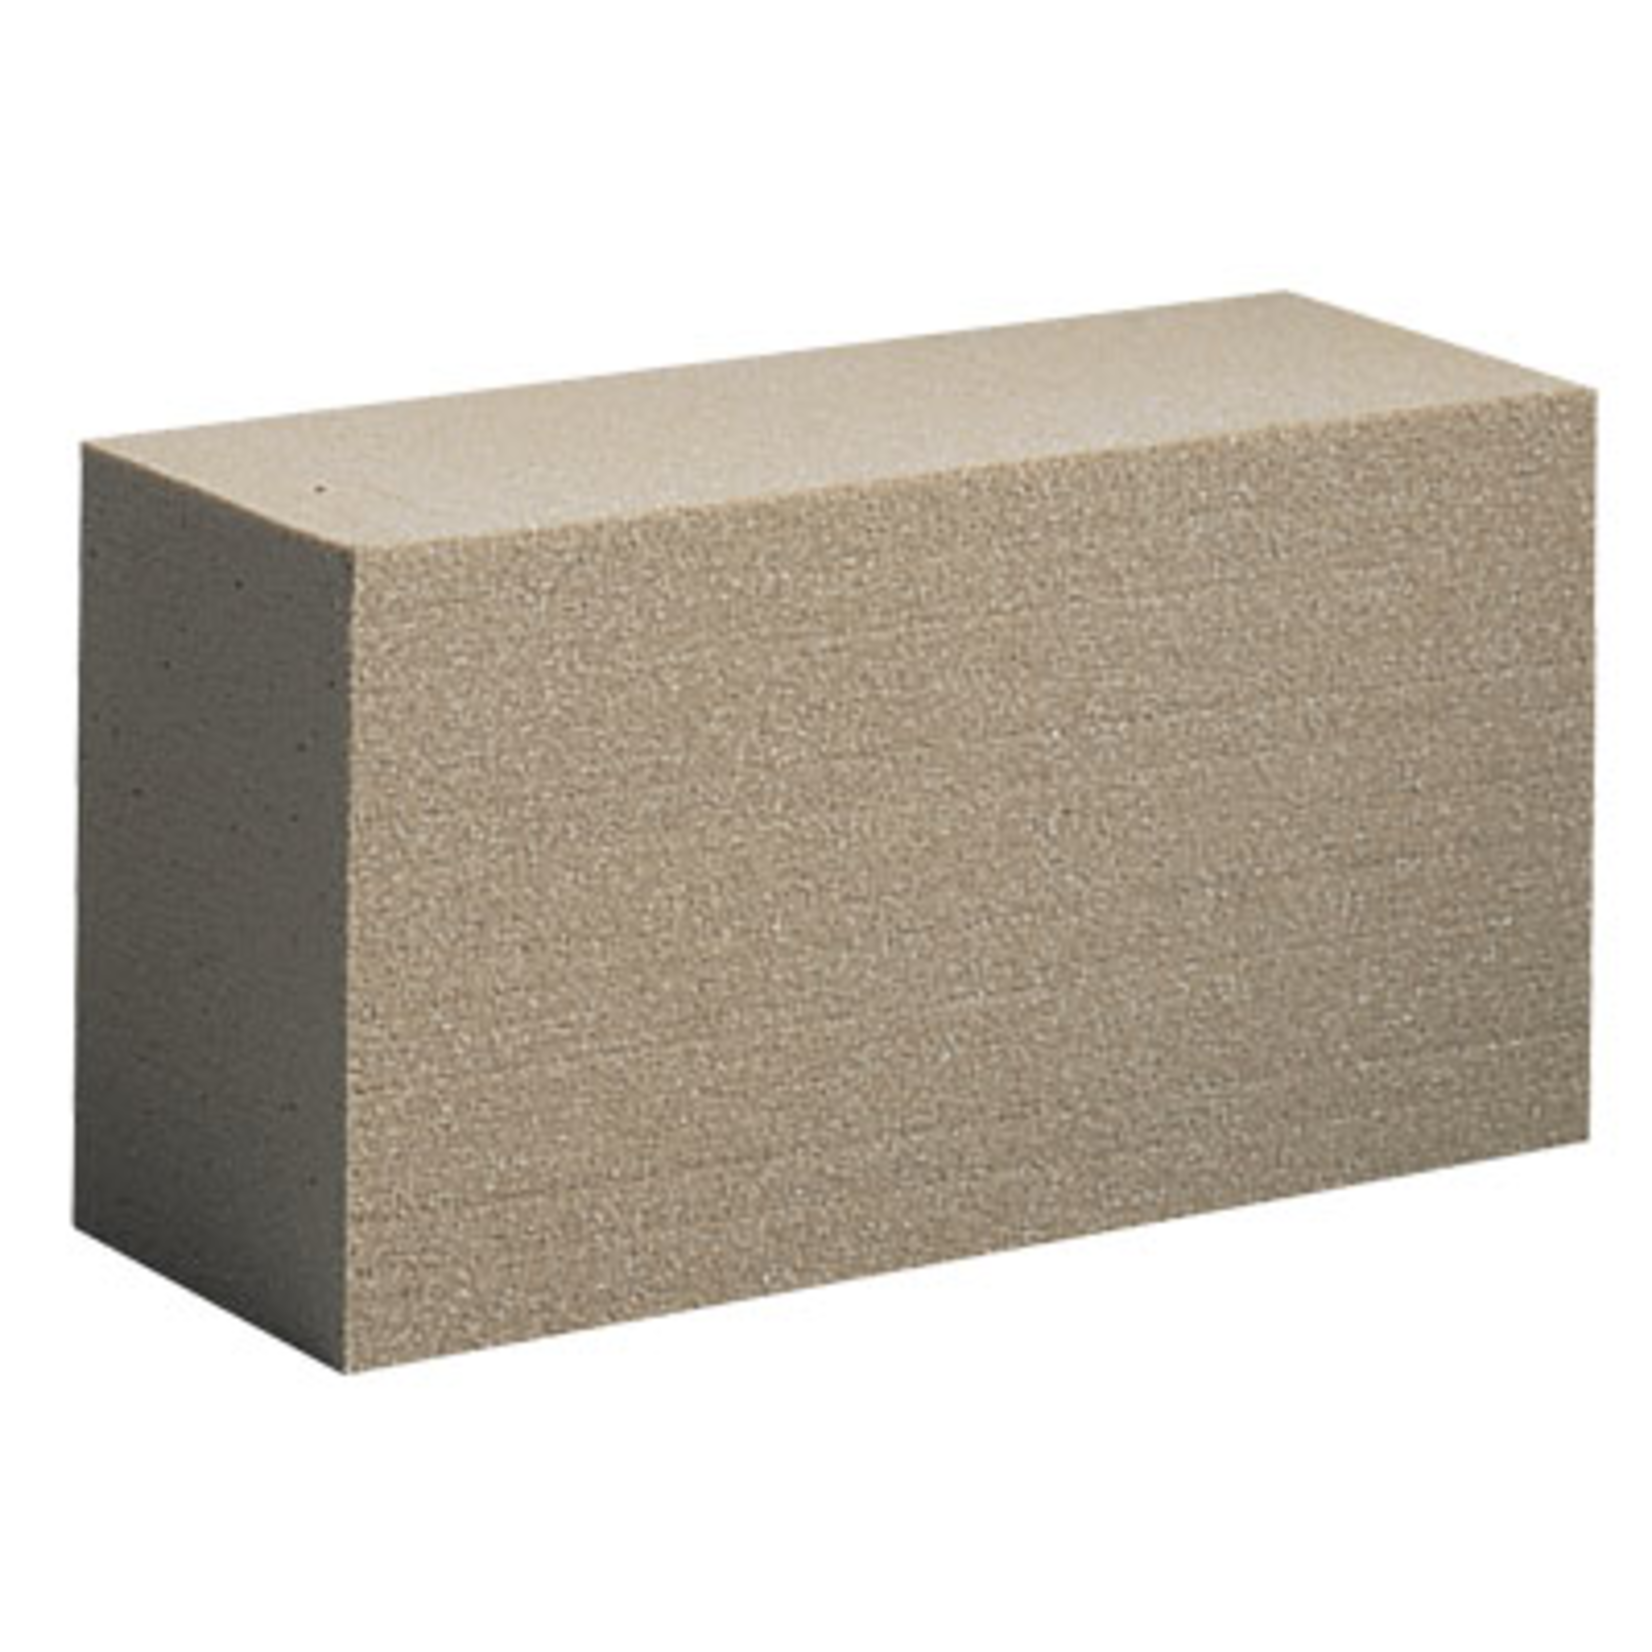 Dri II Brick - Taupe Pack Size: 20 dry foam